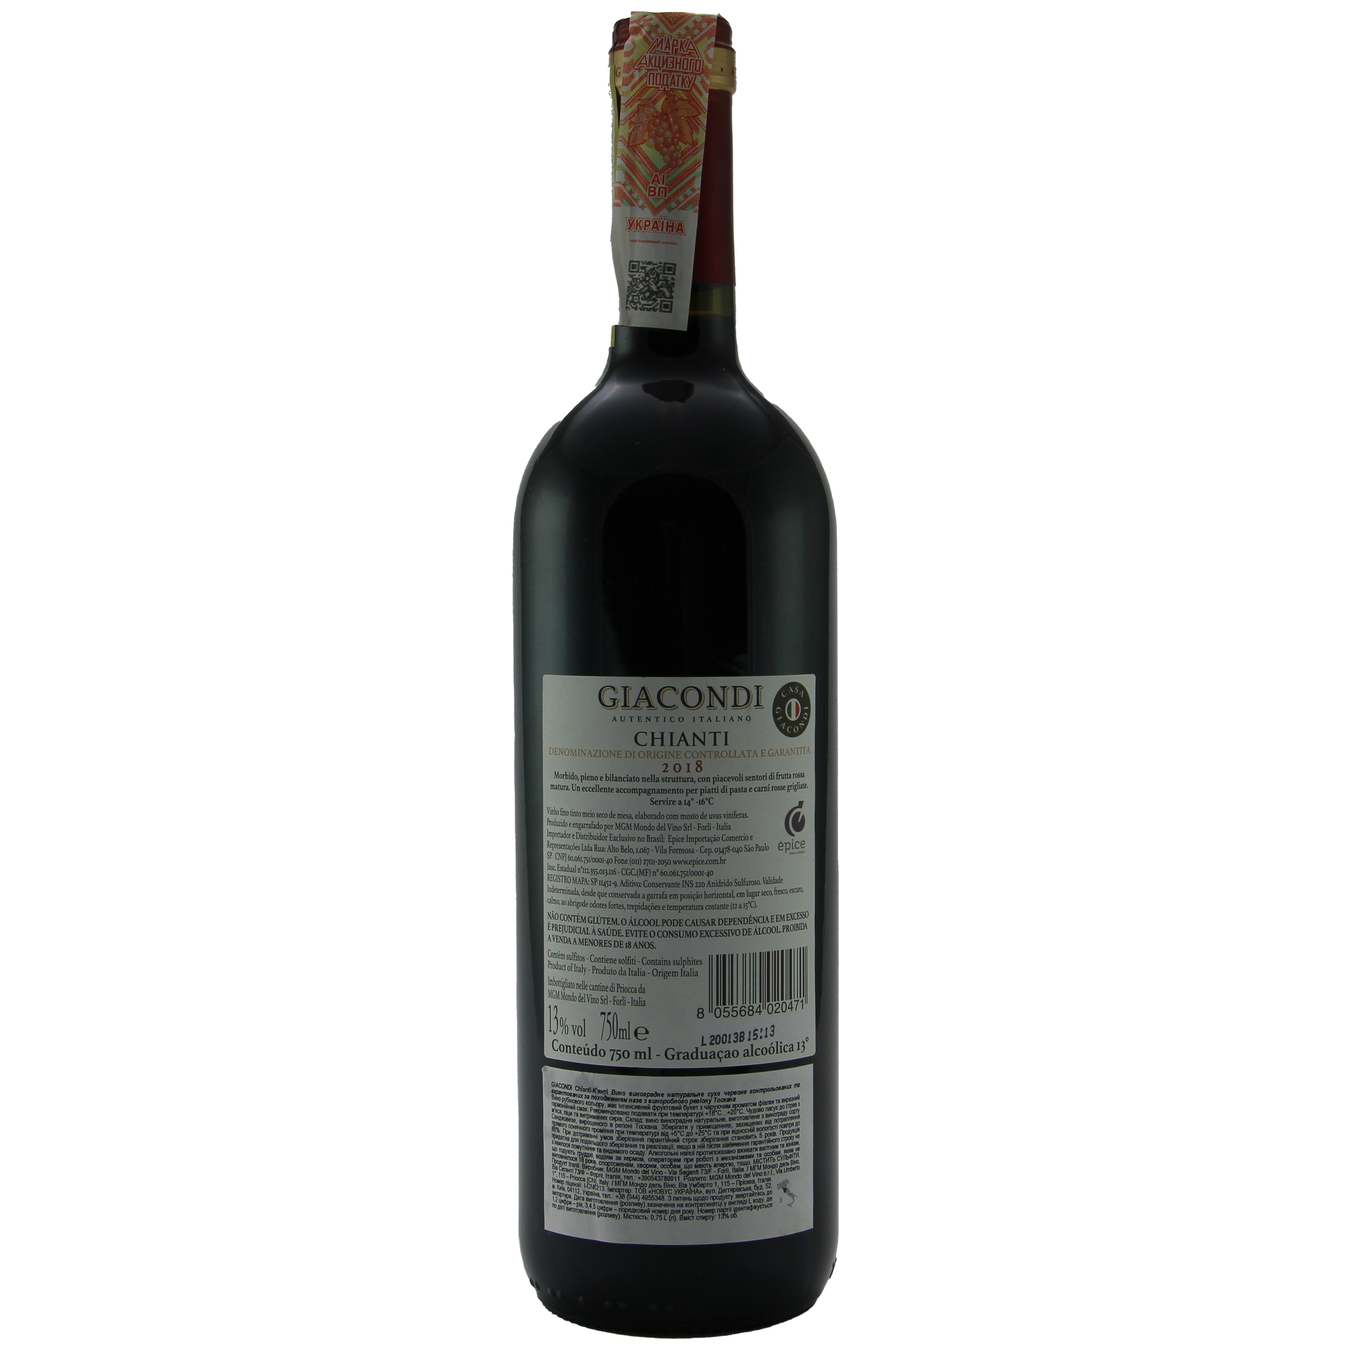 Giacondi Chianti DOCG Red Dry Wine 12,5% 0,75l 2